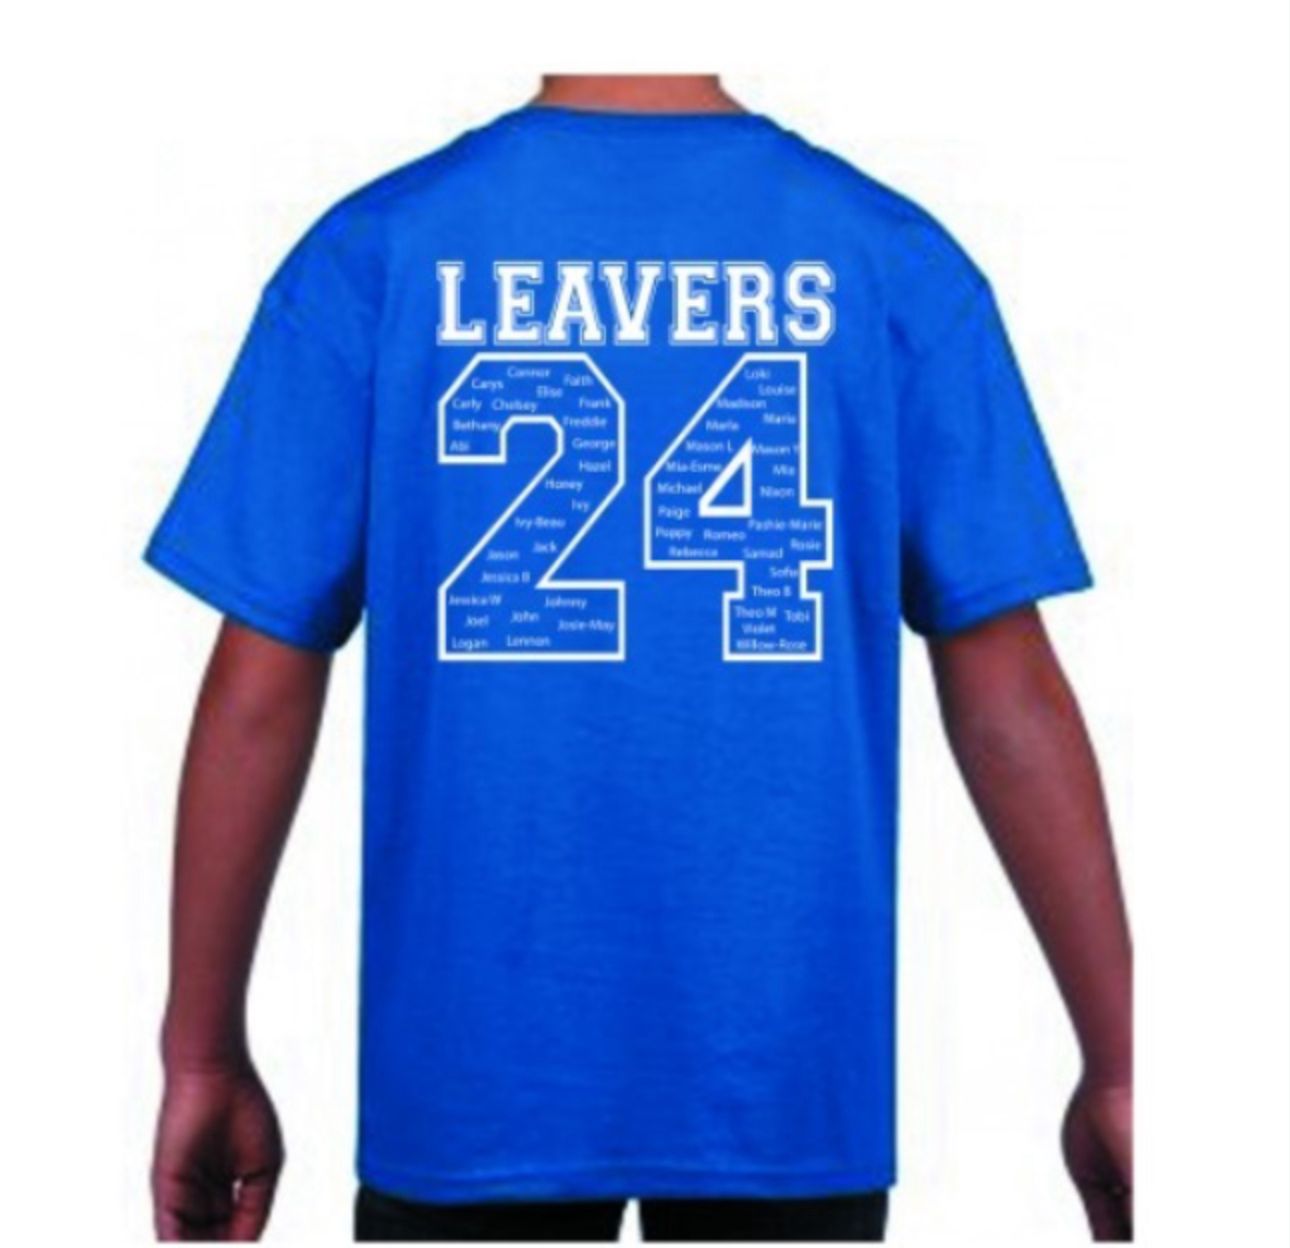 Year 2 Leavers T-Shirt and Tea Towels